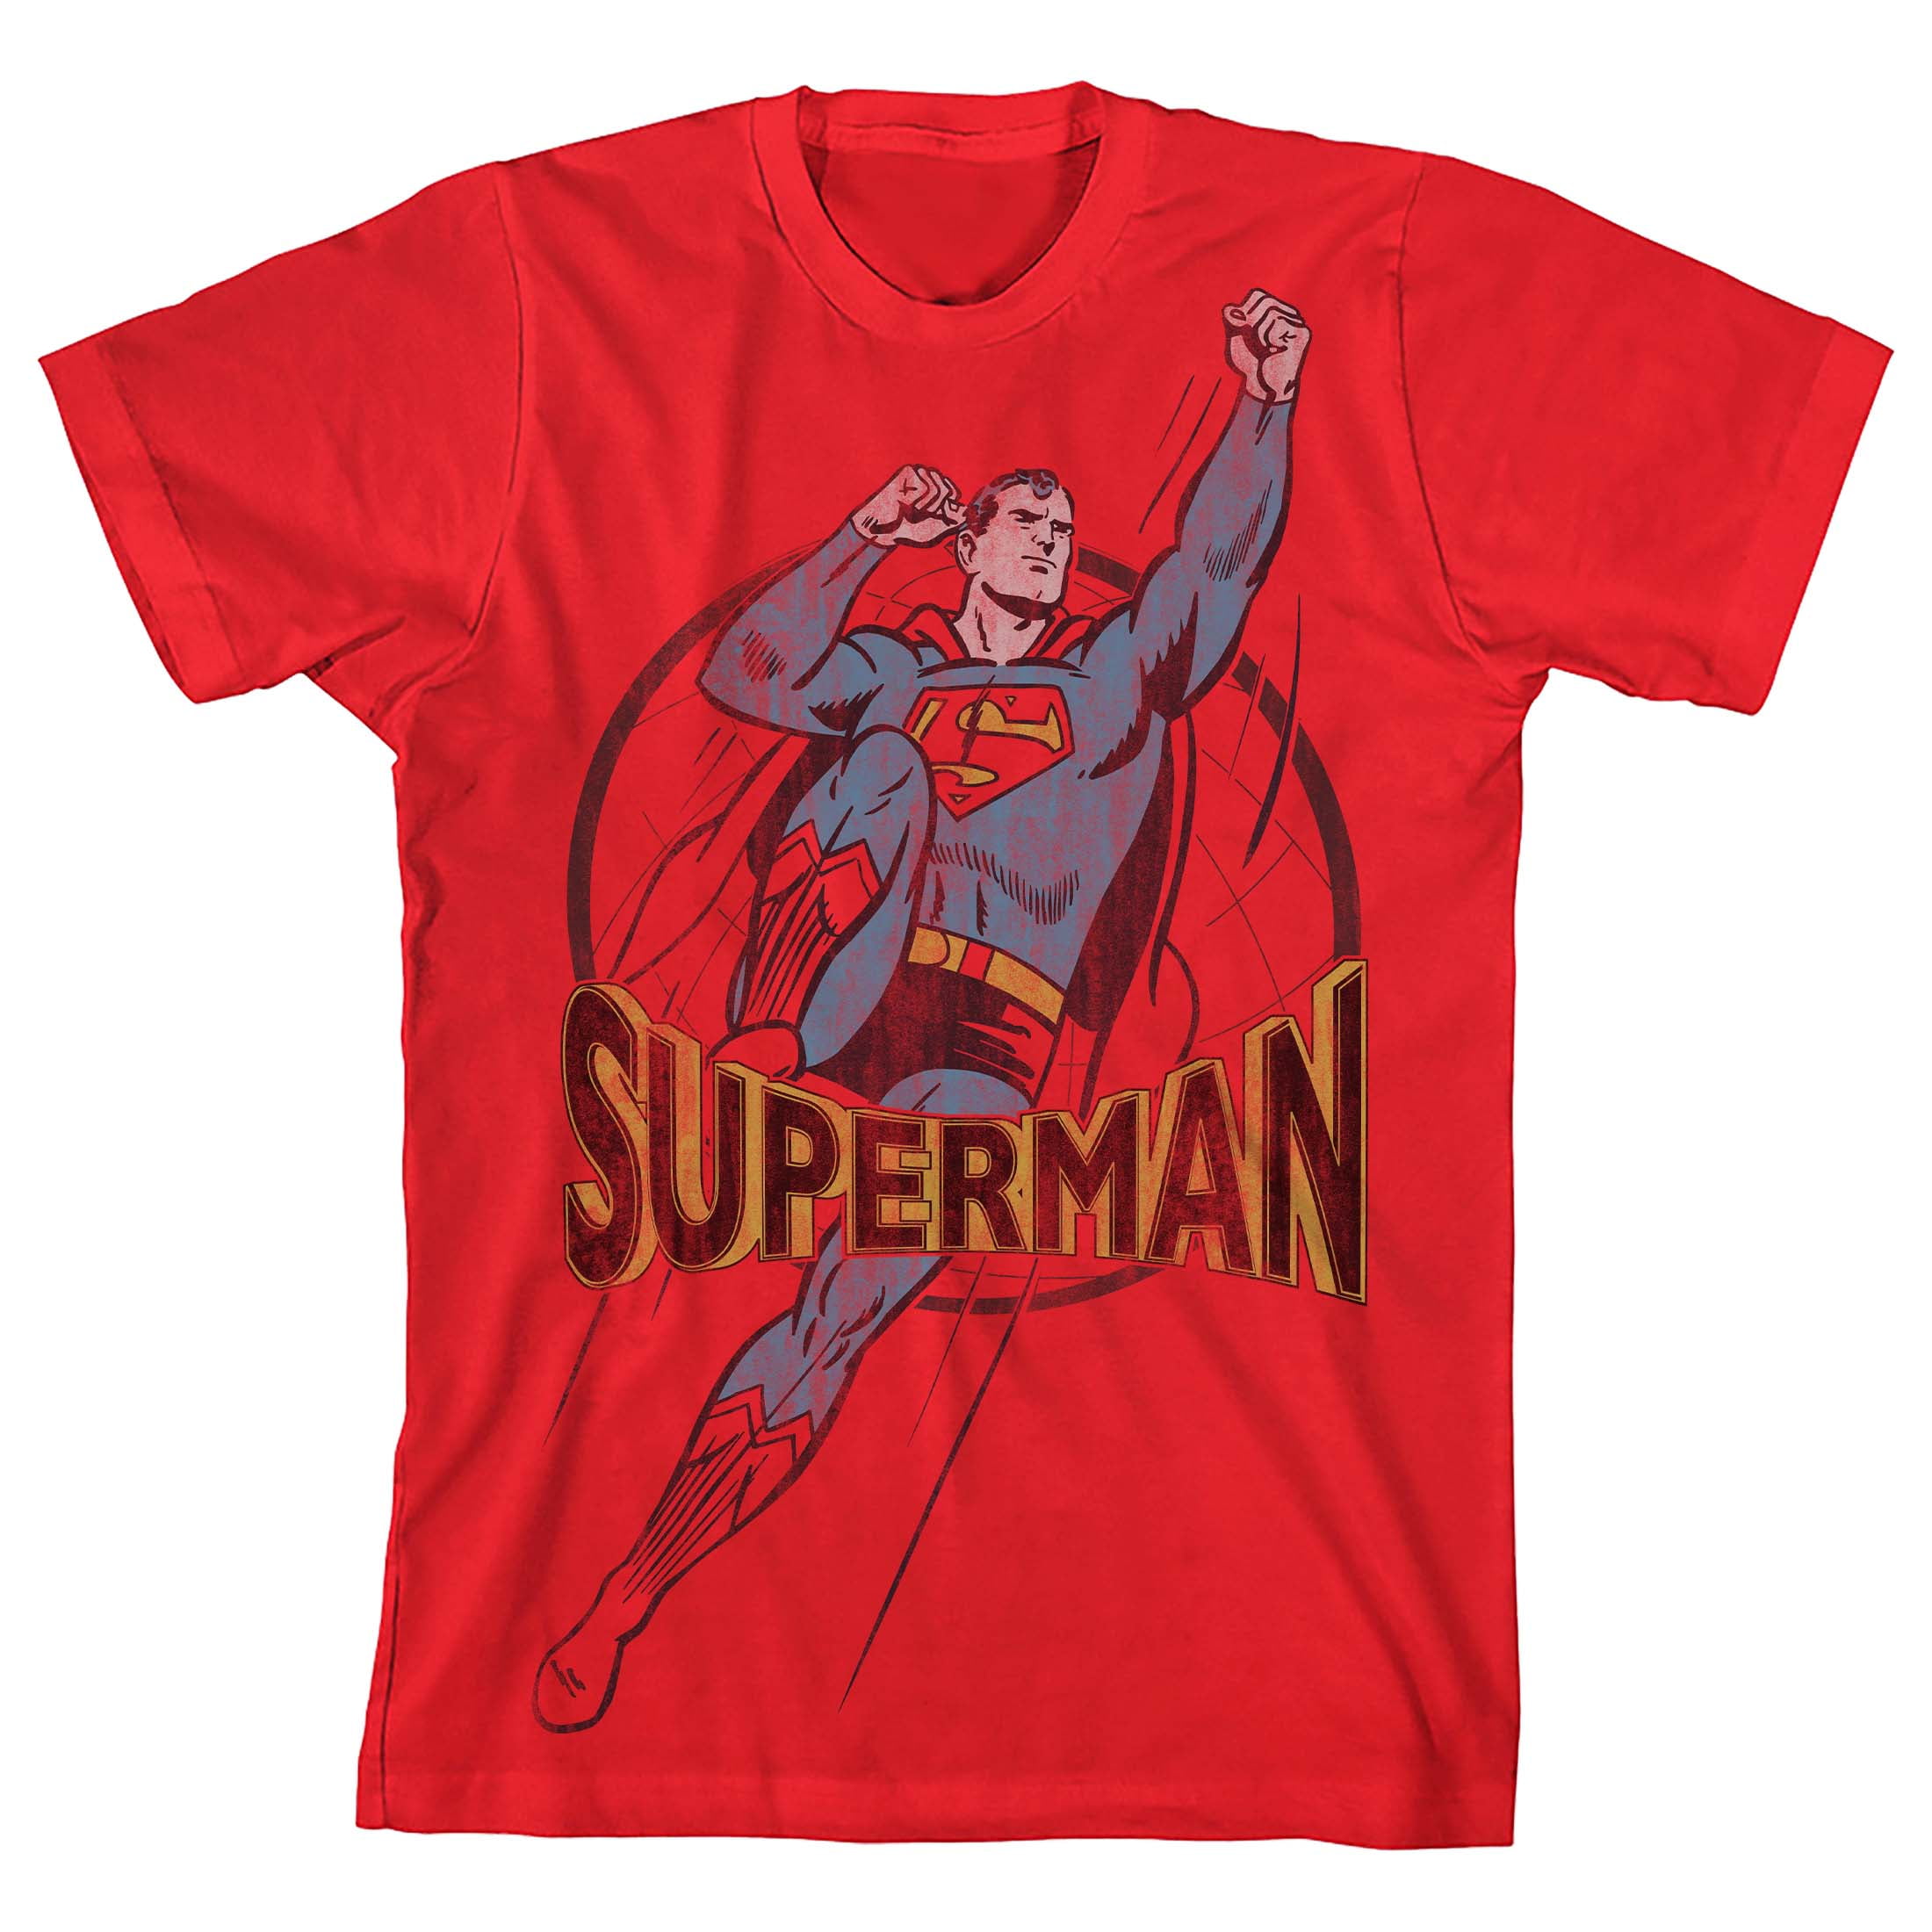 George Hanbury Snel Perfect Superman Distressed Flying Pose Boy's Red T-shirt-XL - Walmart.com